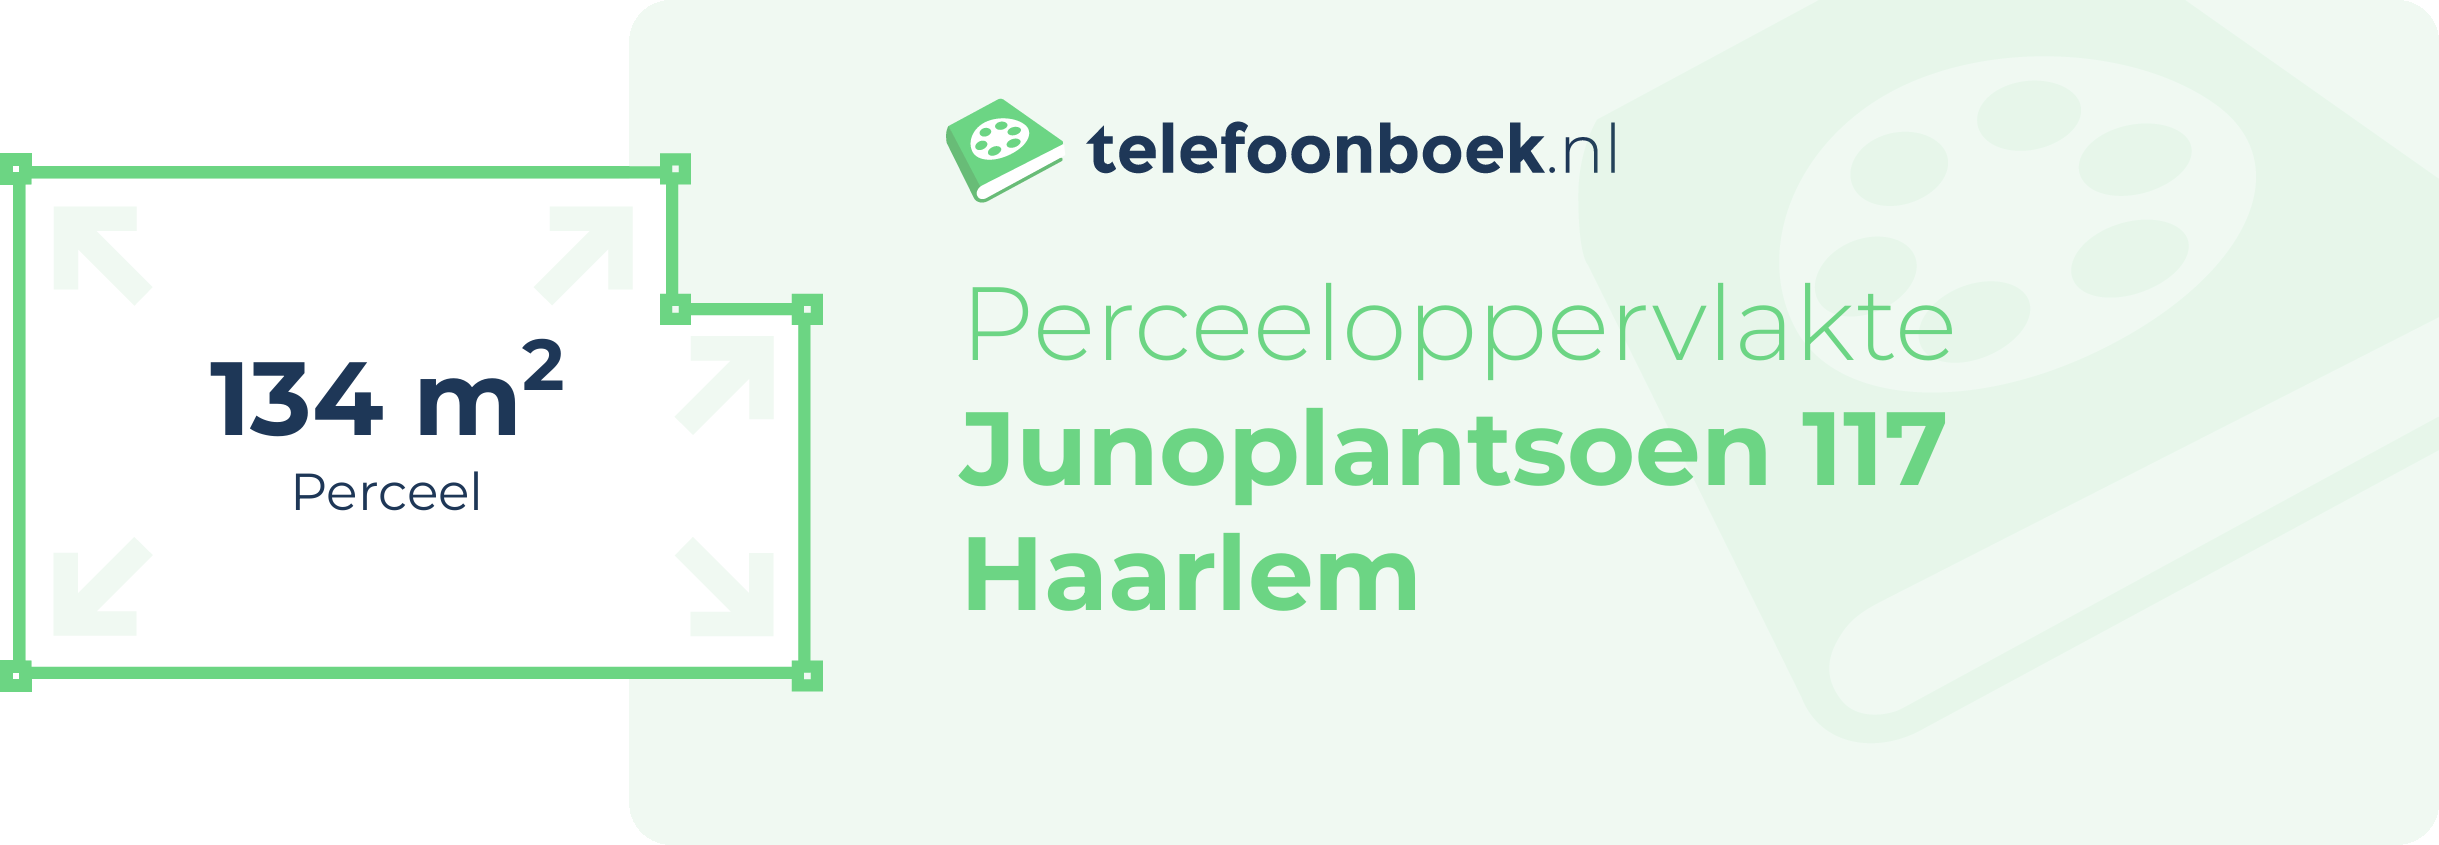 Perceeloppervlakte Junoplantsoen 117 Haarlem